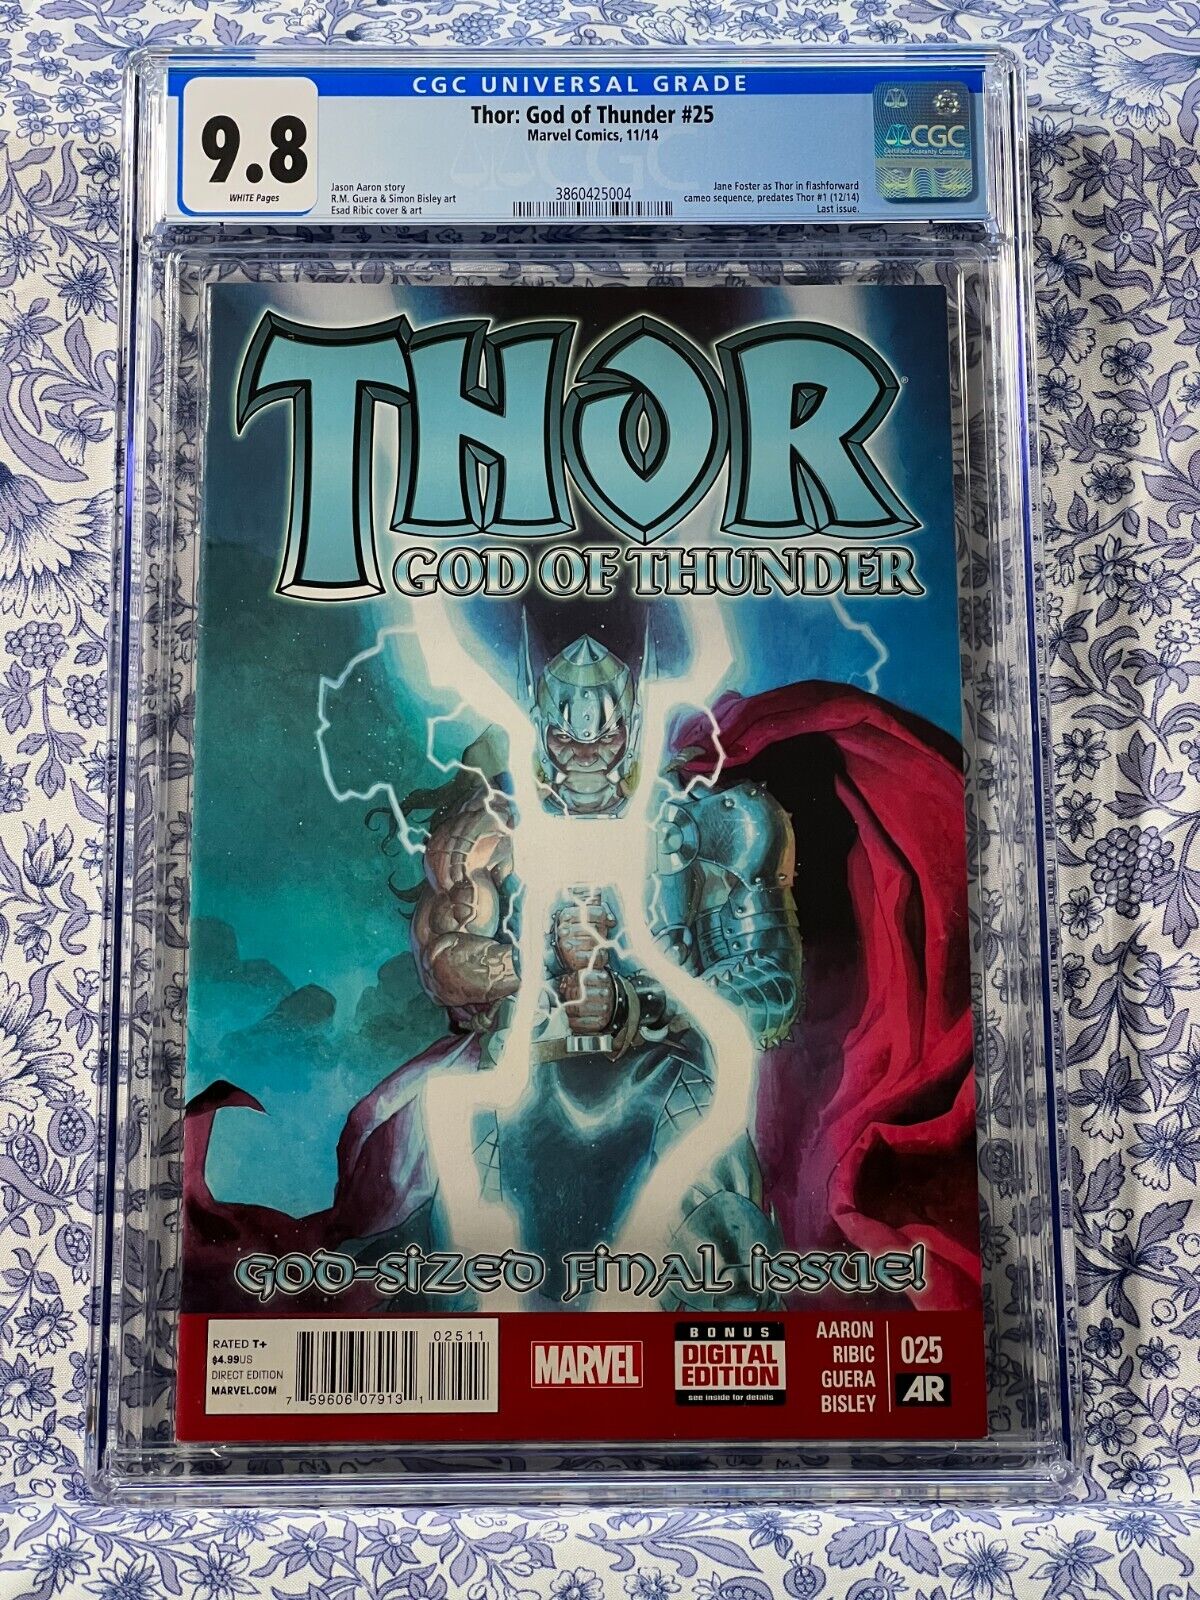 THOR GOD OF THUNDER #25 CGC 9.8 WP Ribic Jane Foster (11/14) predates Thor #1